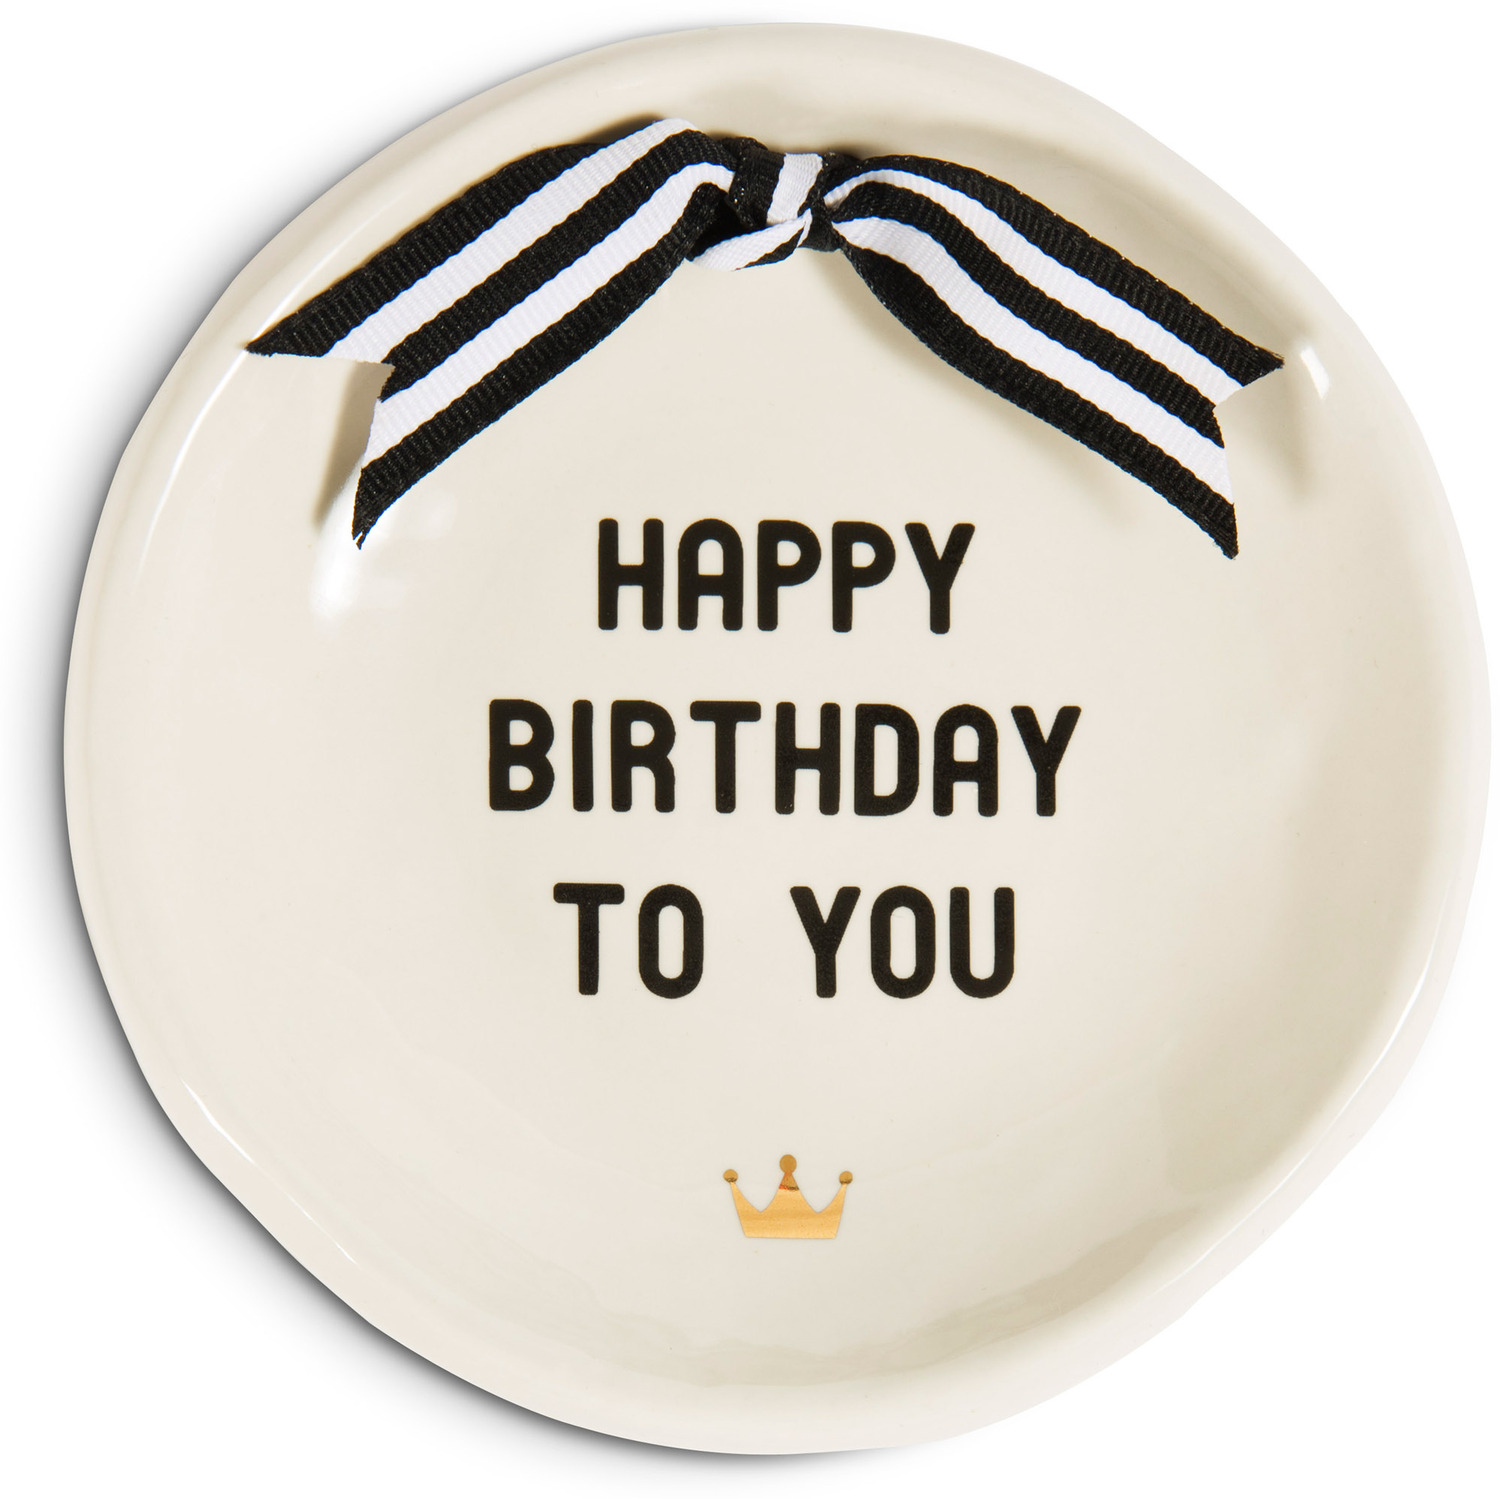 Happy Birthday by The Milestone Collection - Happy Birthday - 4.25" Diameter Round Keepsake Dish